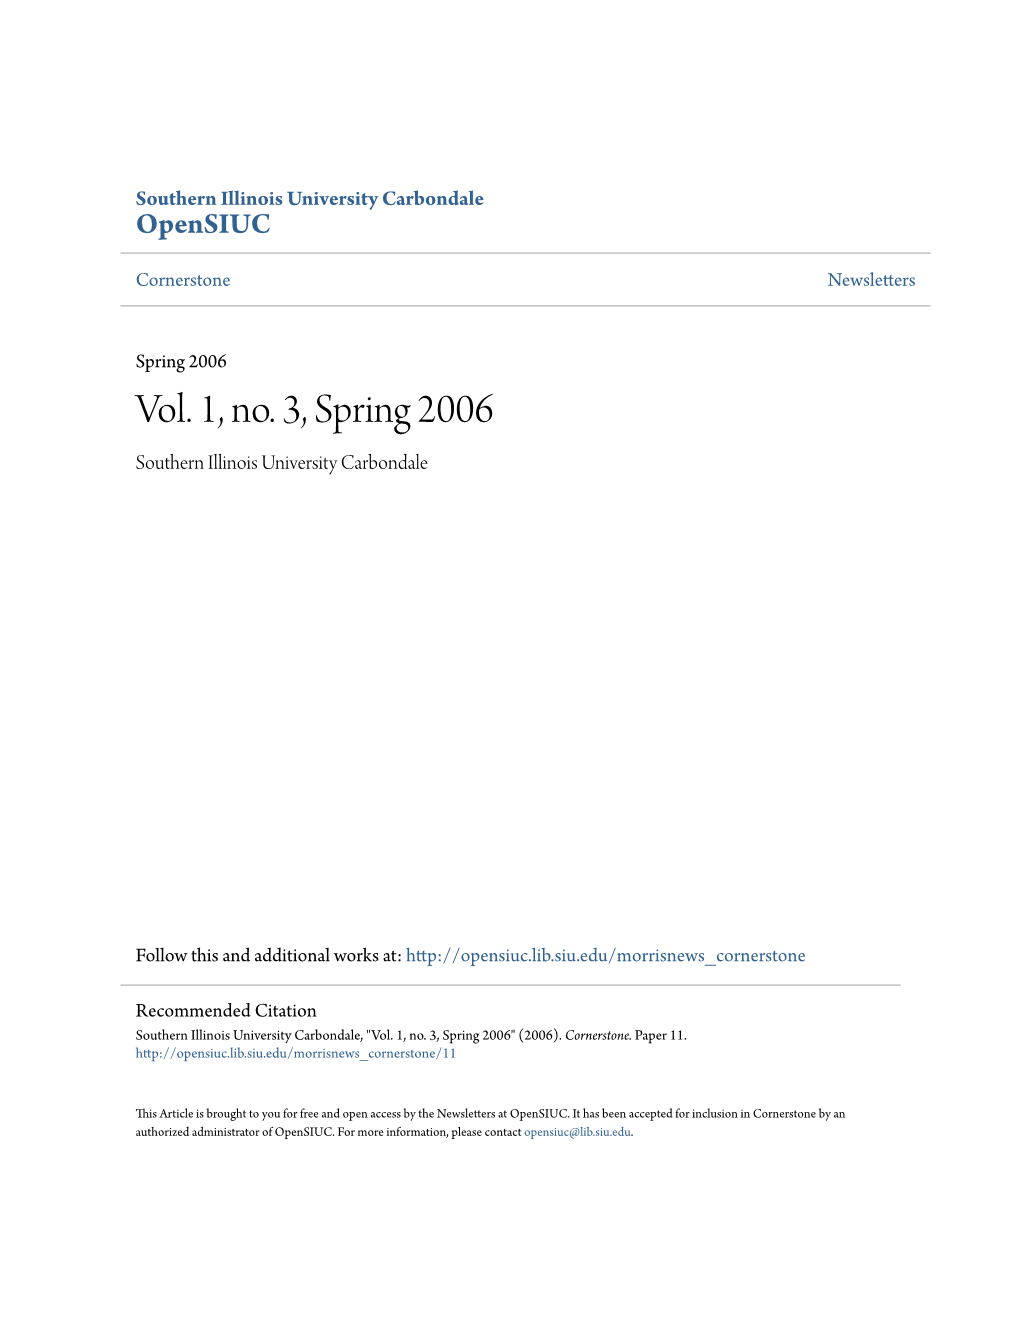 Vol. 1, No. 3, Spring 2006 Southern Illinois University Carbondale